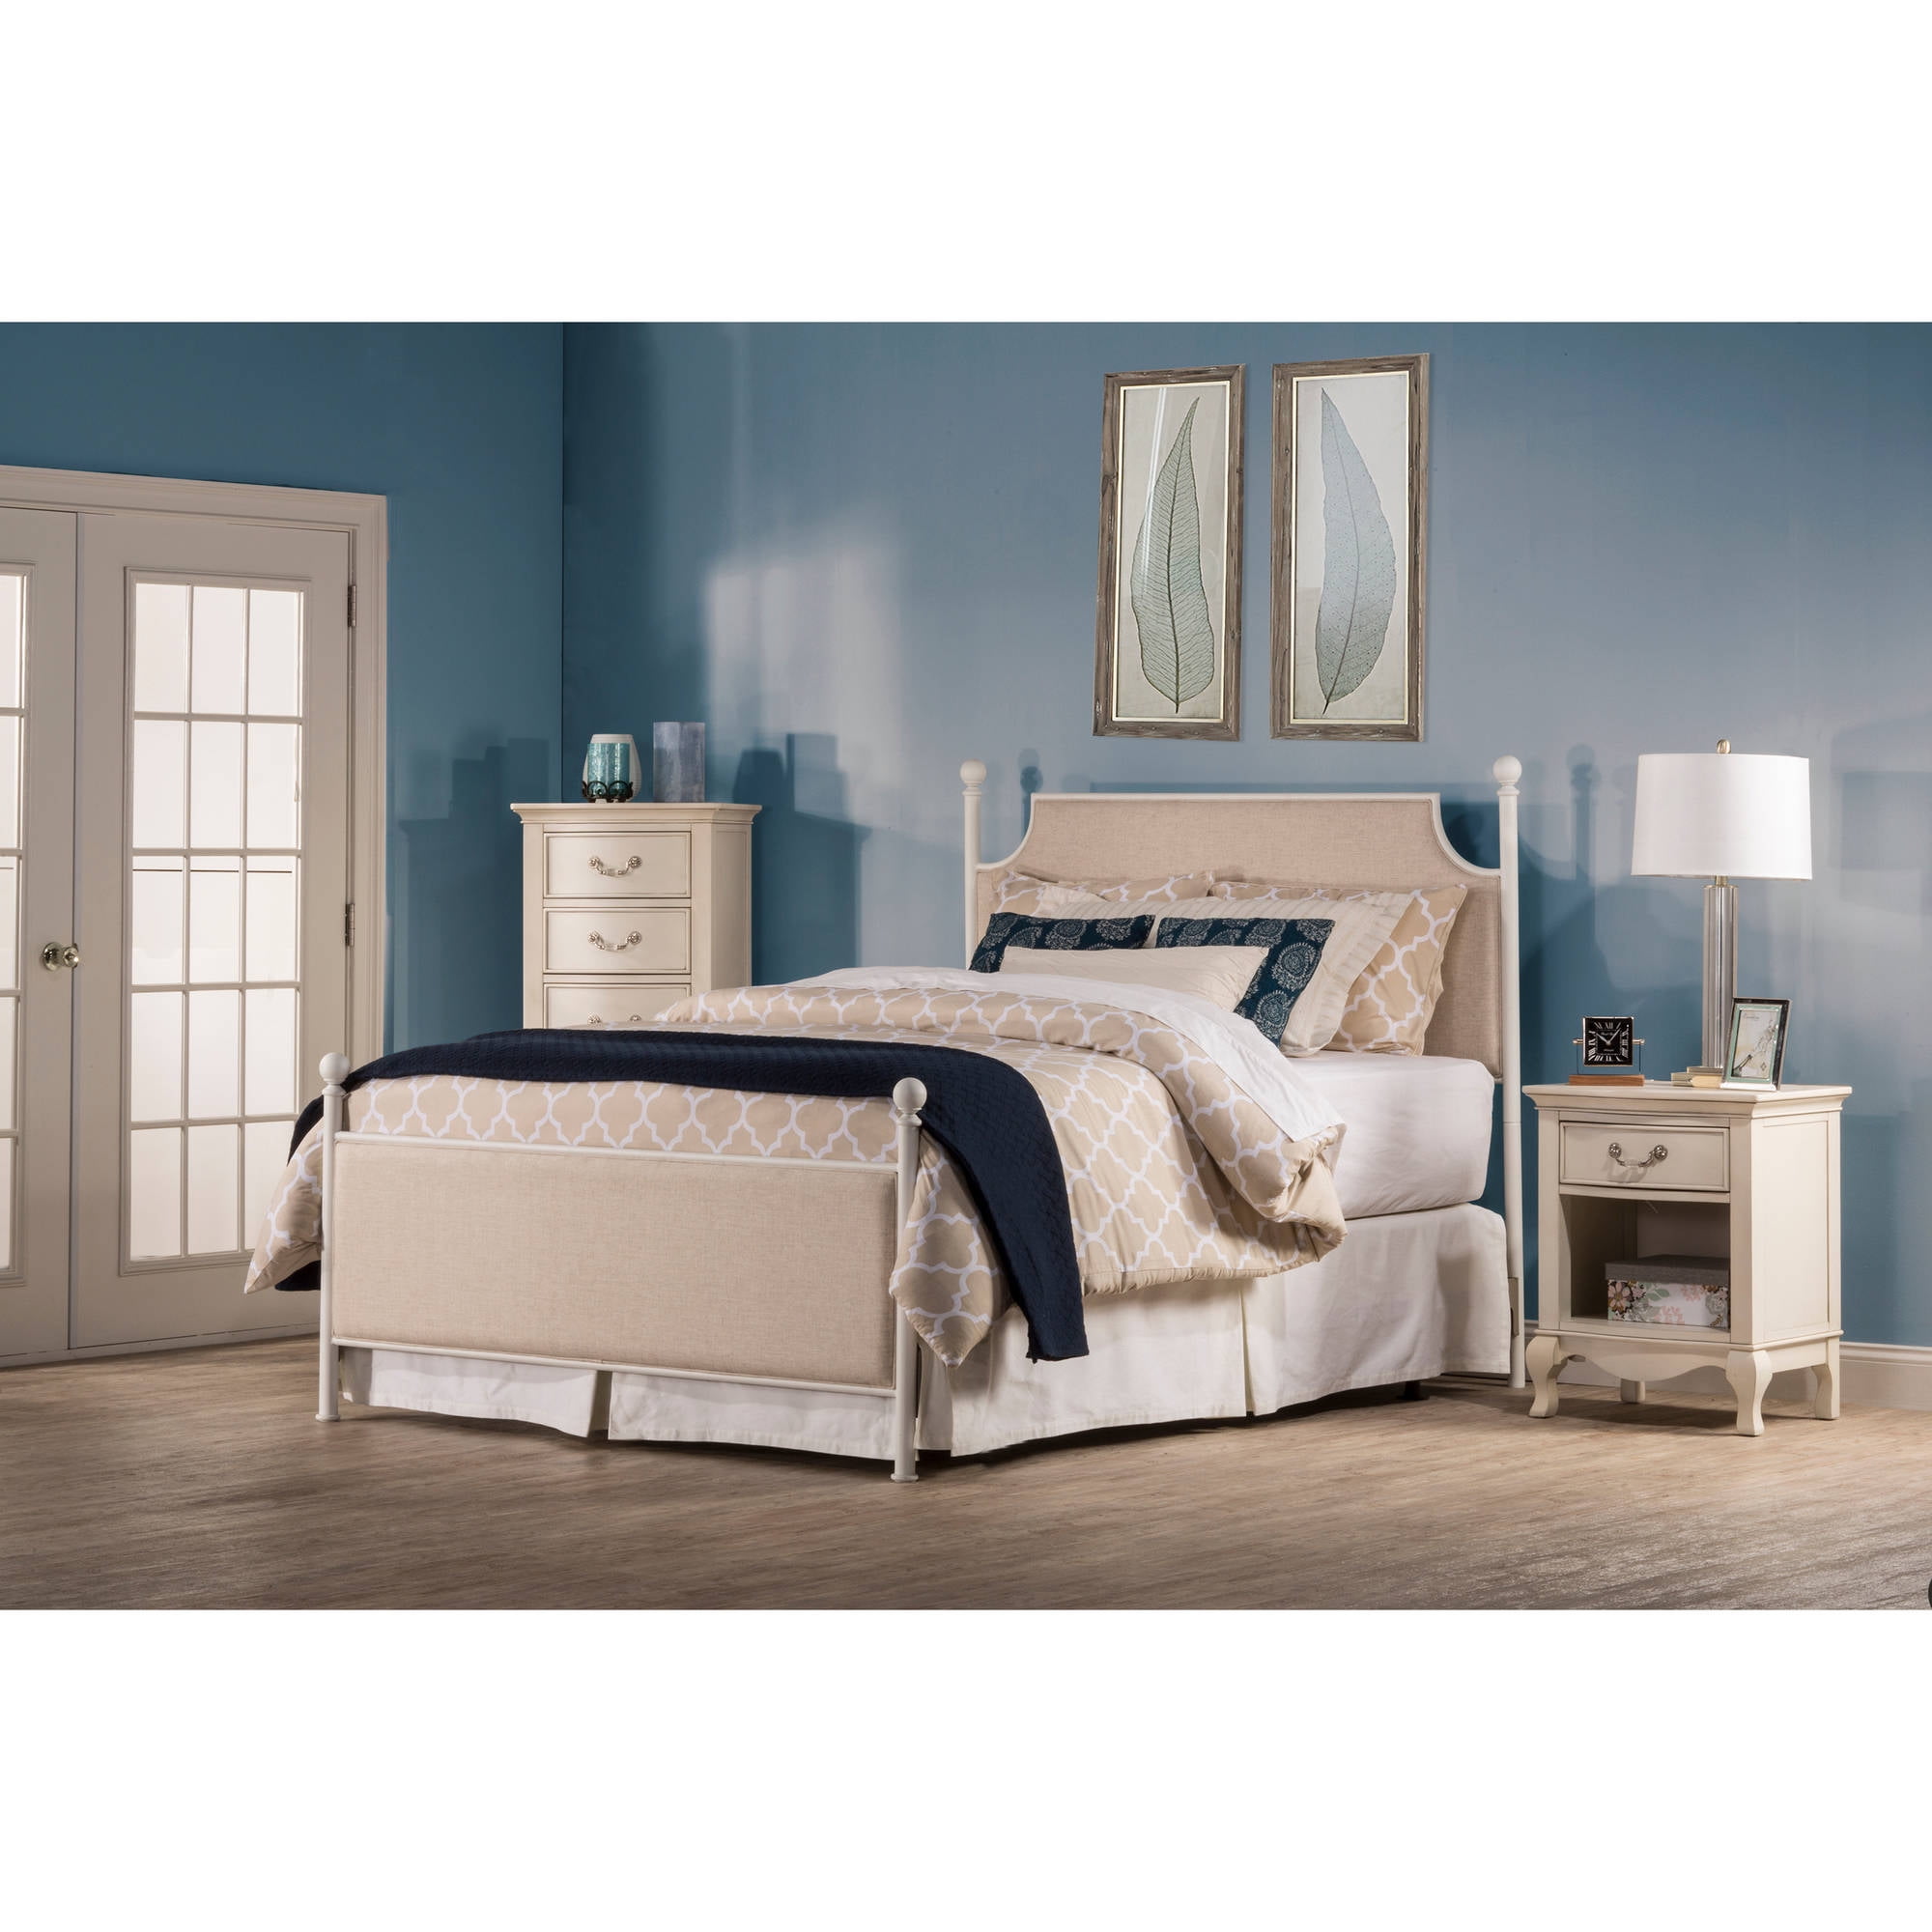 Hillsdale Furniture Mcarthur Queen Bed With Bedframe Off White Walmart Com Walmart Com